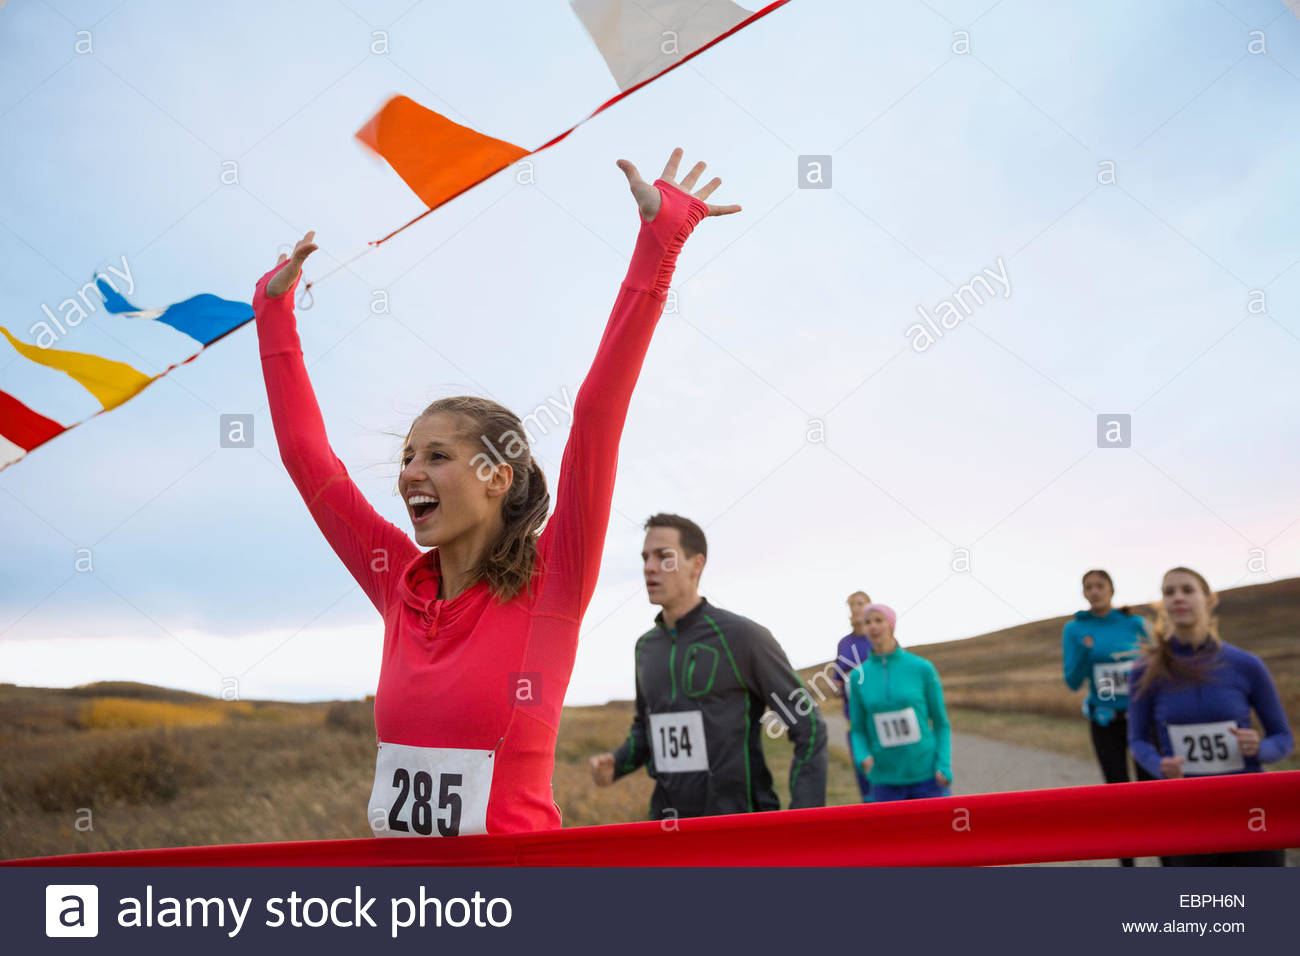 Cheering runner approaching finish line Stock Photo